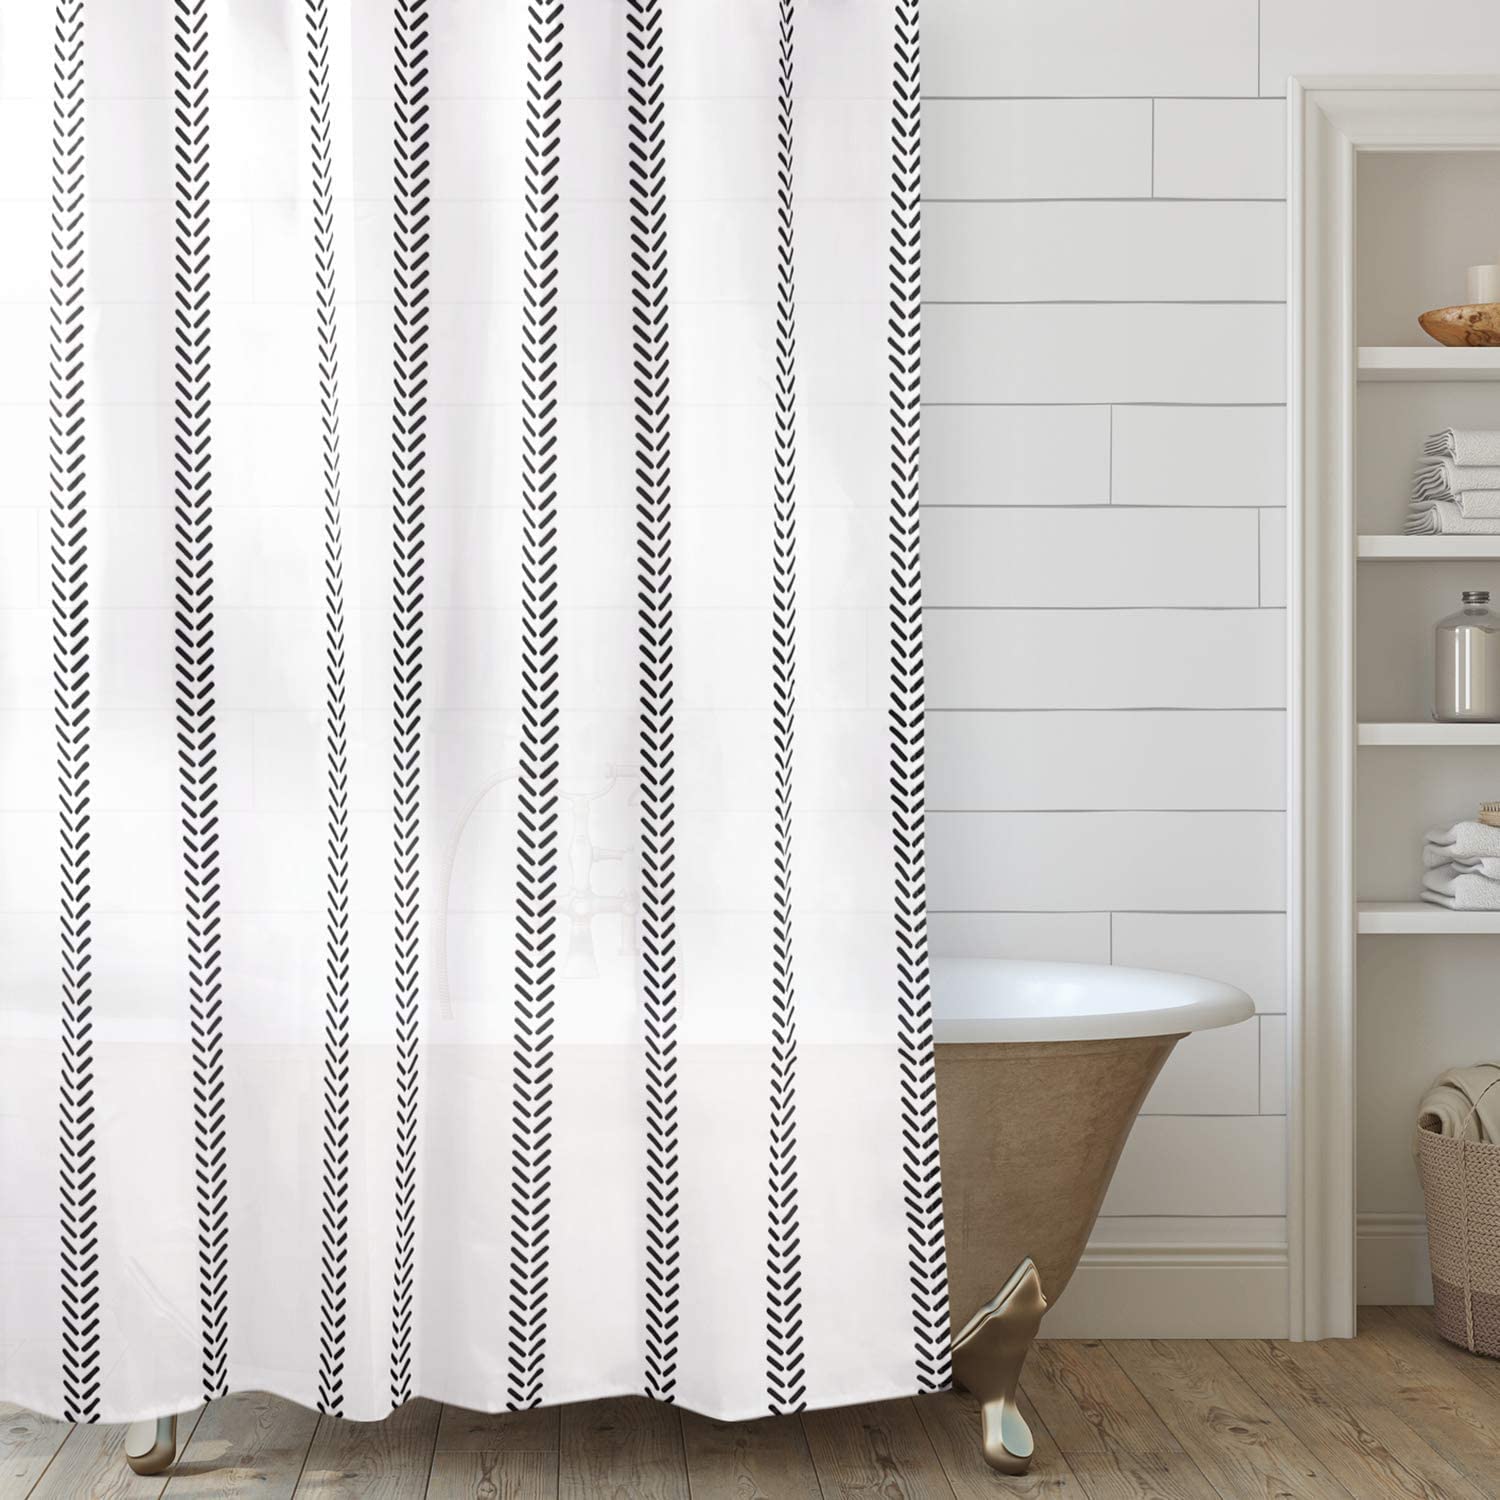 Shower Curtain Set With 12 Metal Hooks Boho Arrow Modern Design For B Varato